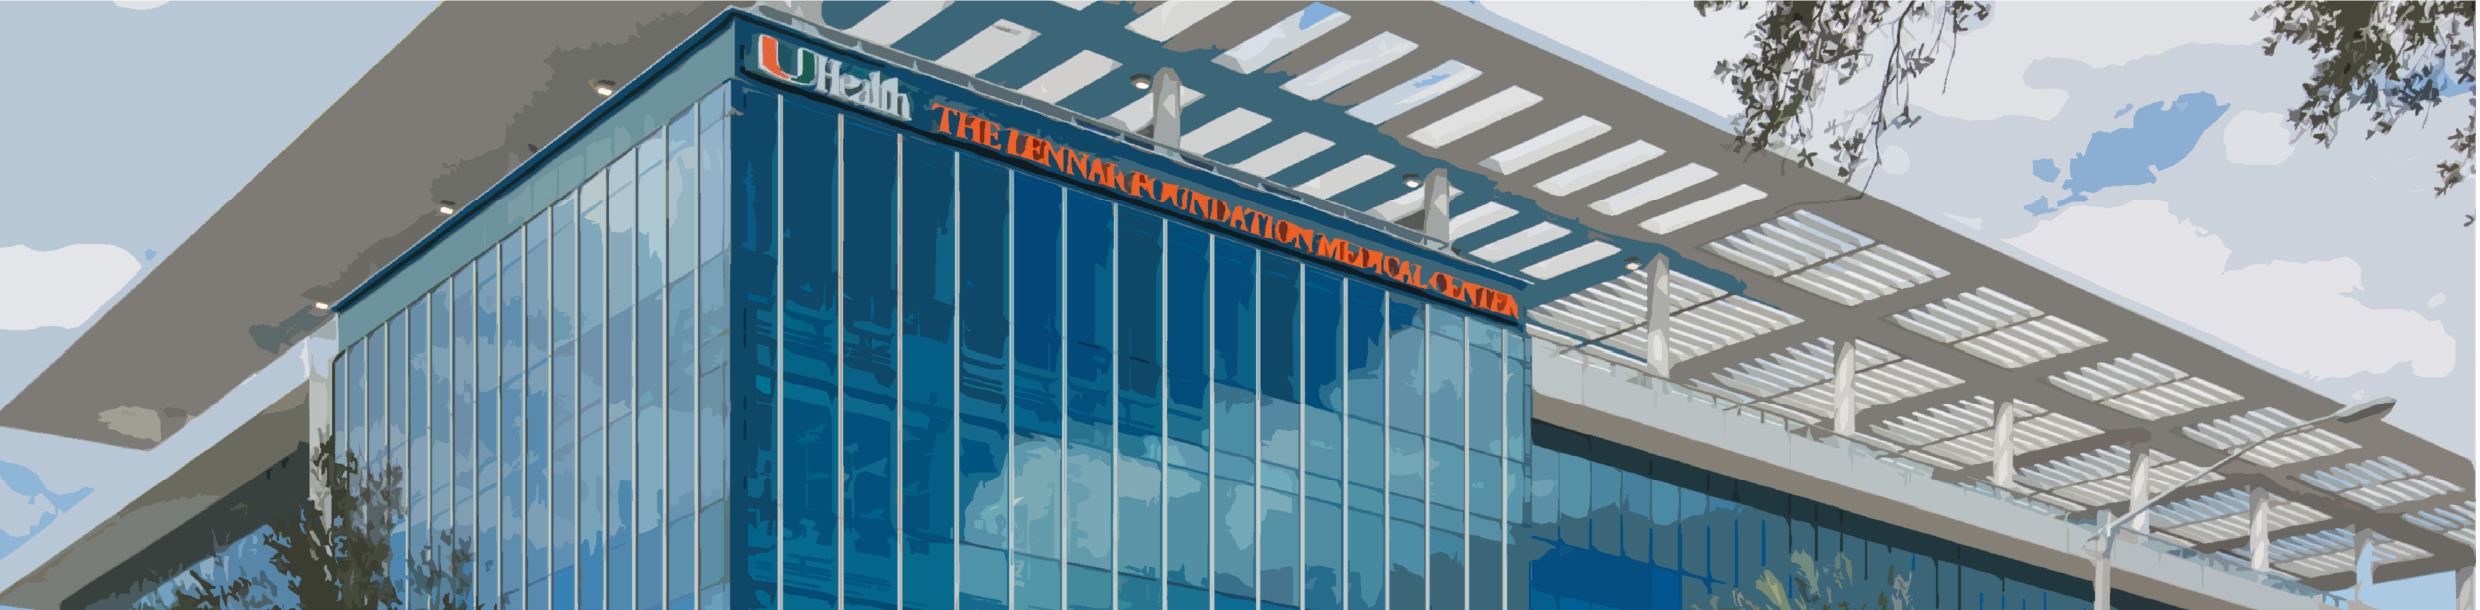 Lennar Foundation Medical Center